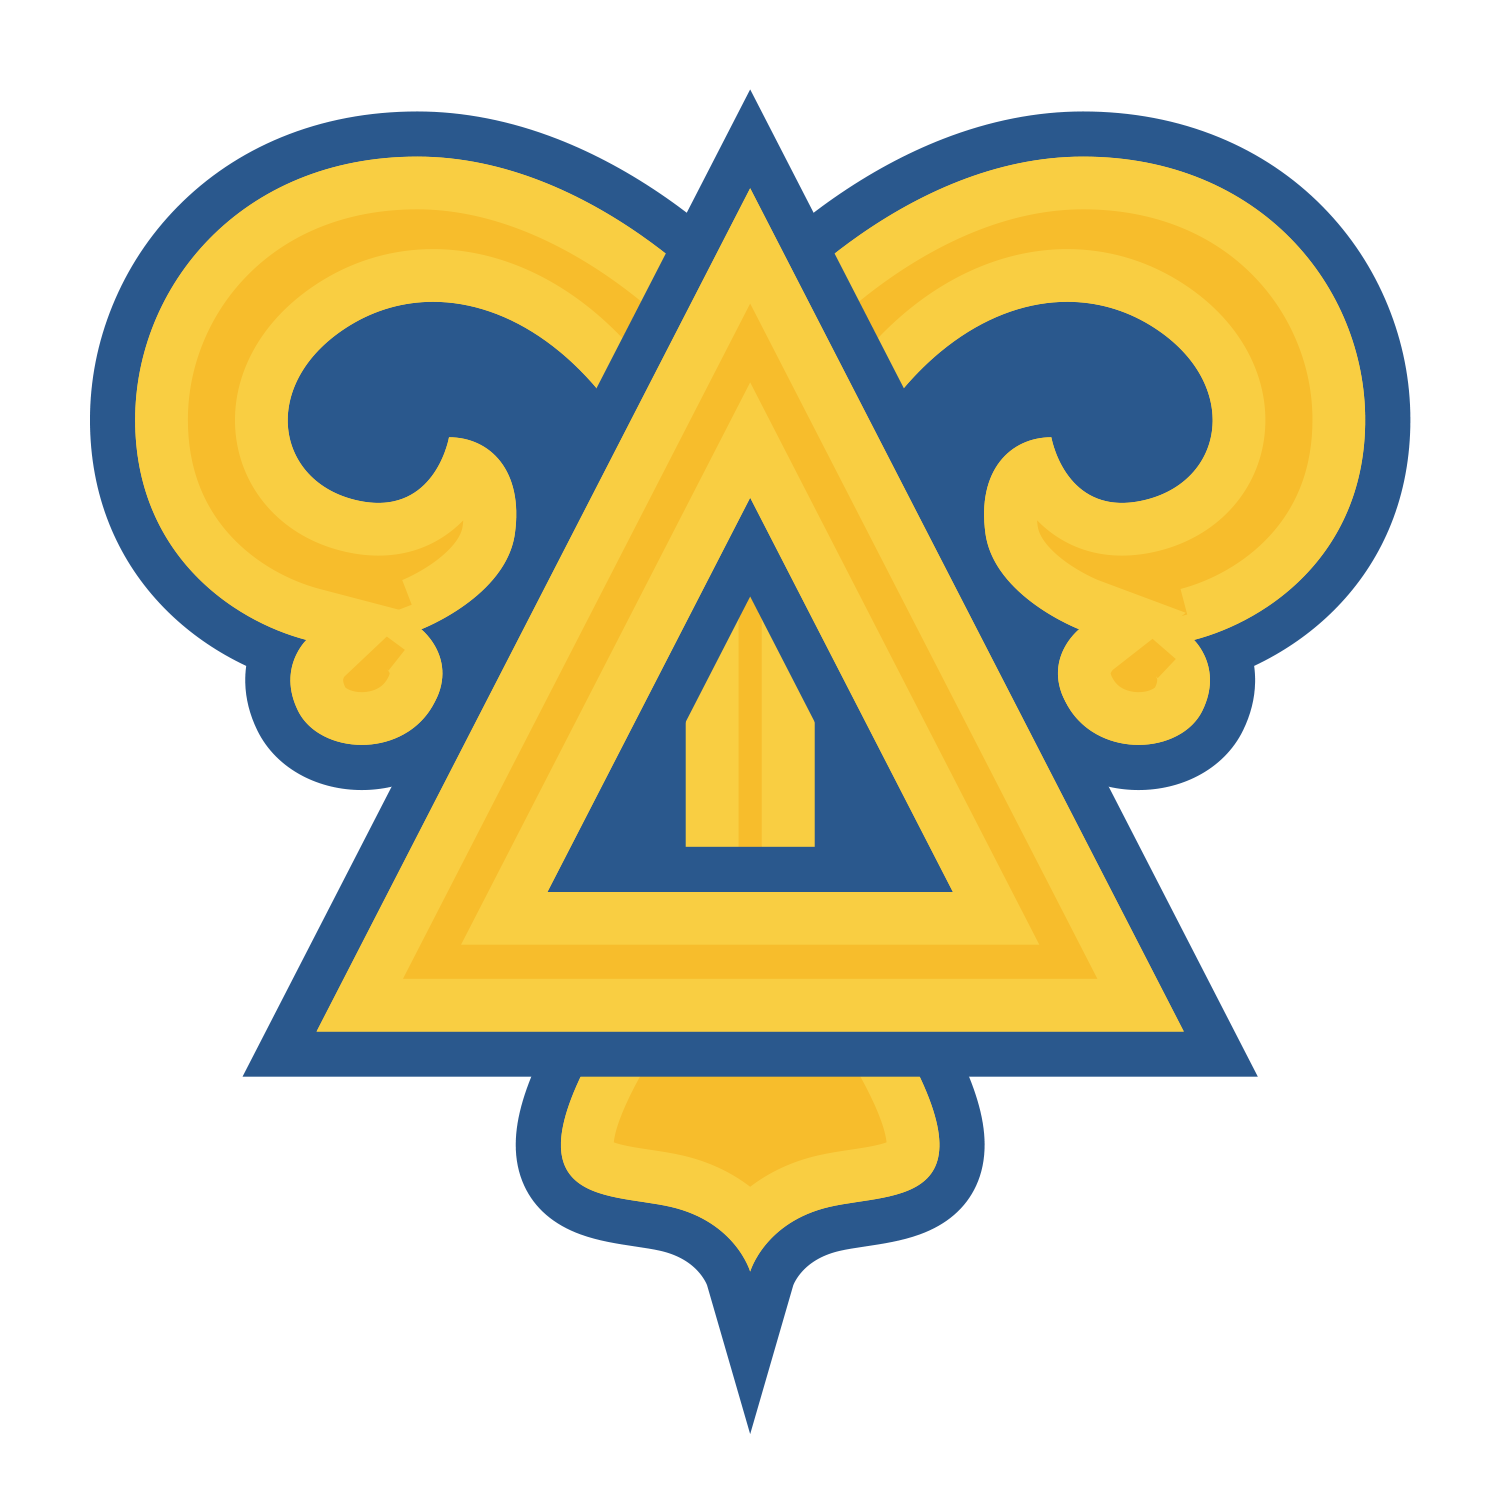 Delta Upsilon design bold organization badge logo